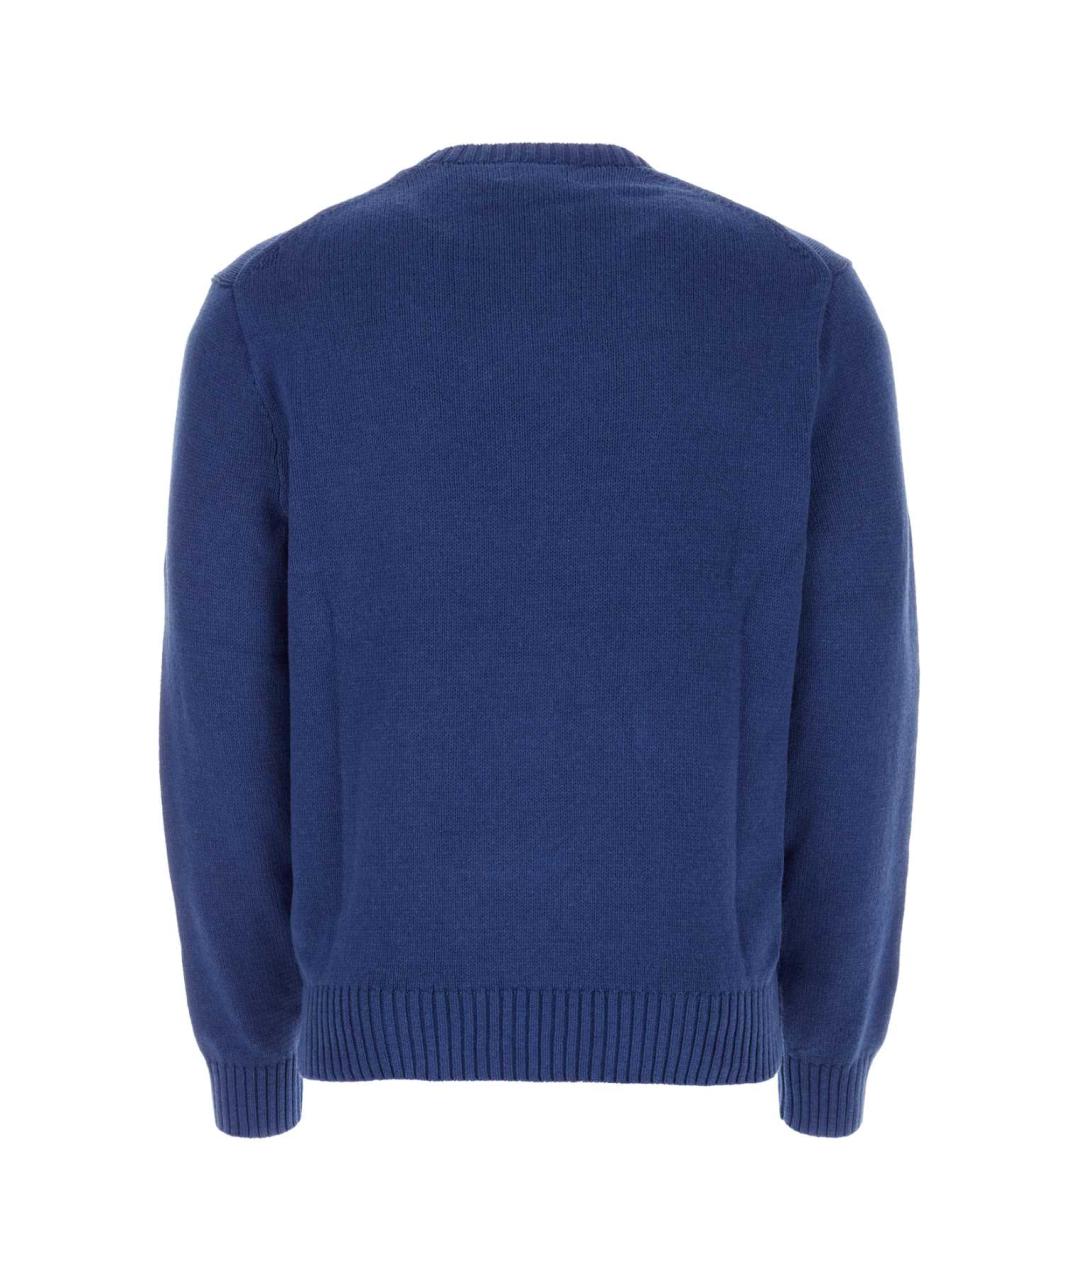 POLO RALPH LAUREN Синий хлопковый джемпер / свитер, фото 2